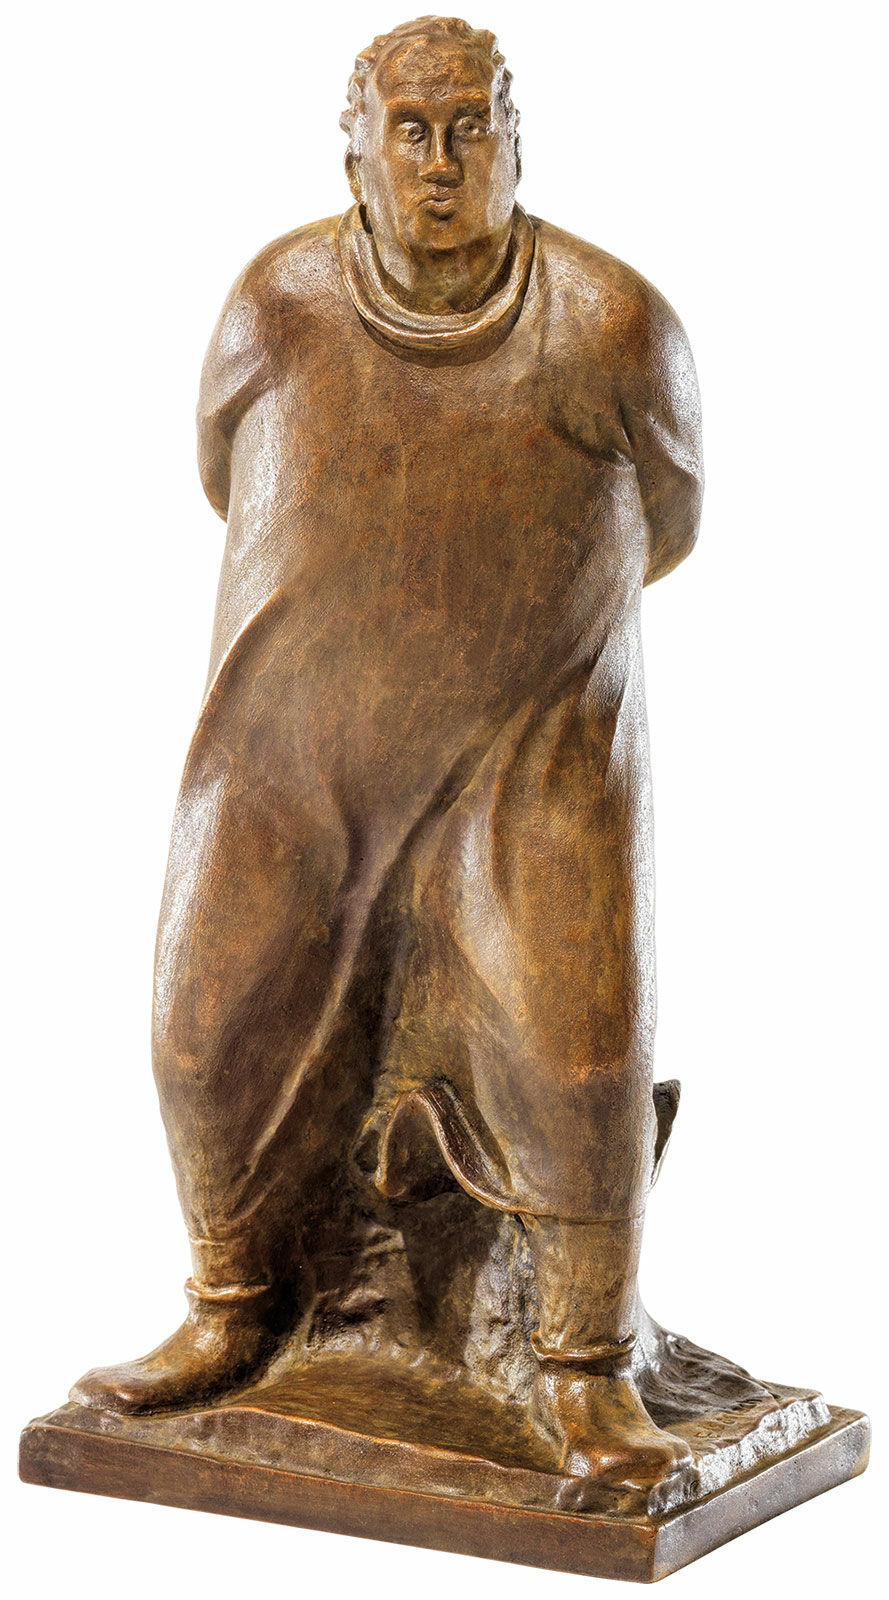 Sculpture "The Stroller" (1912), bronze reduction by Ernst Barlach